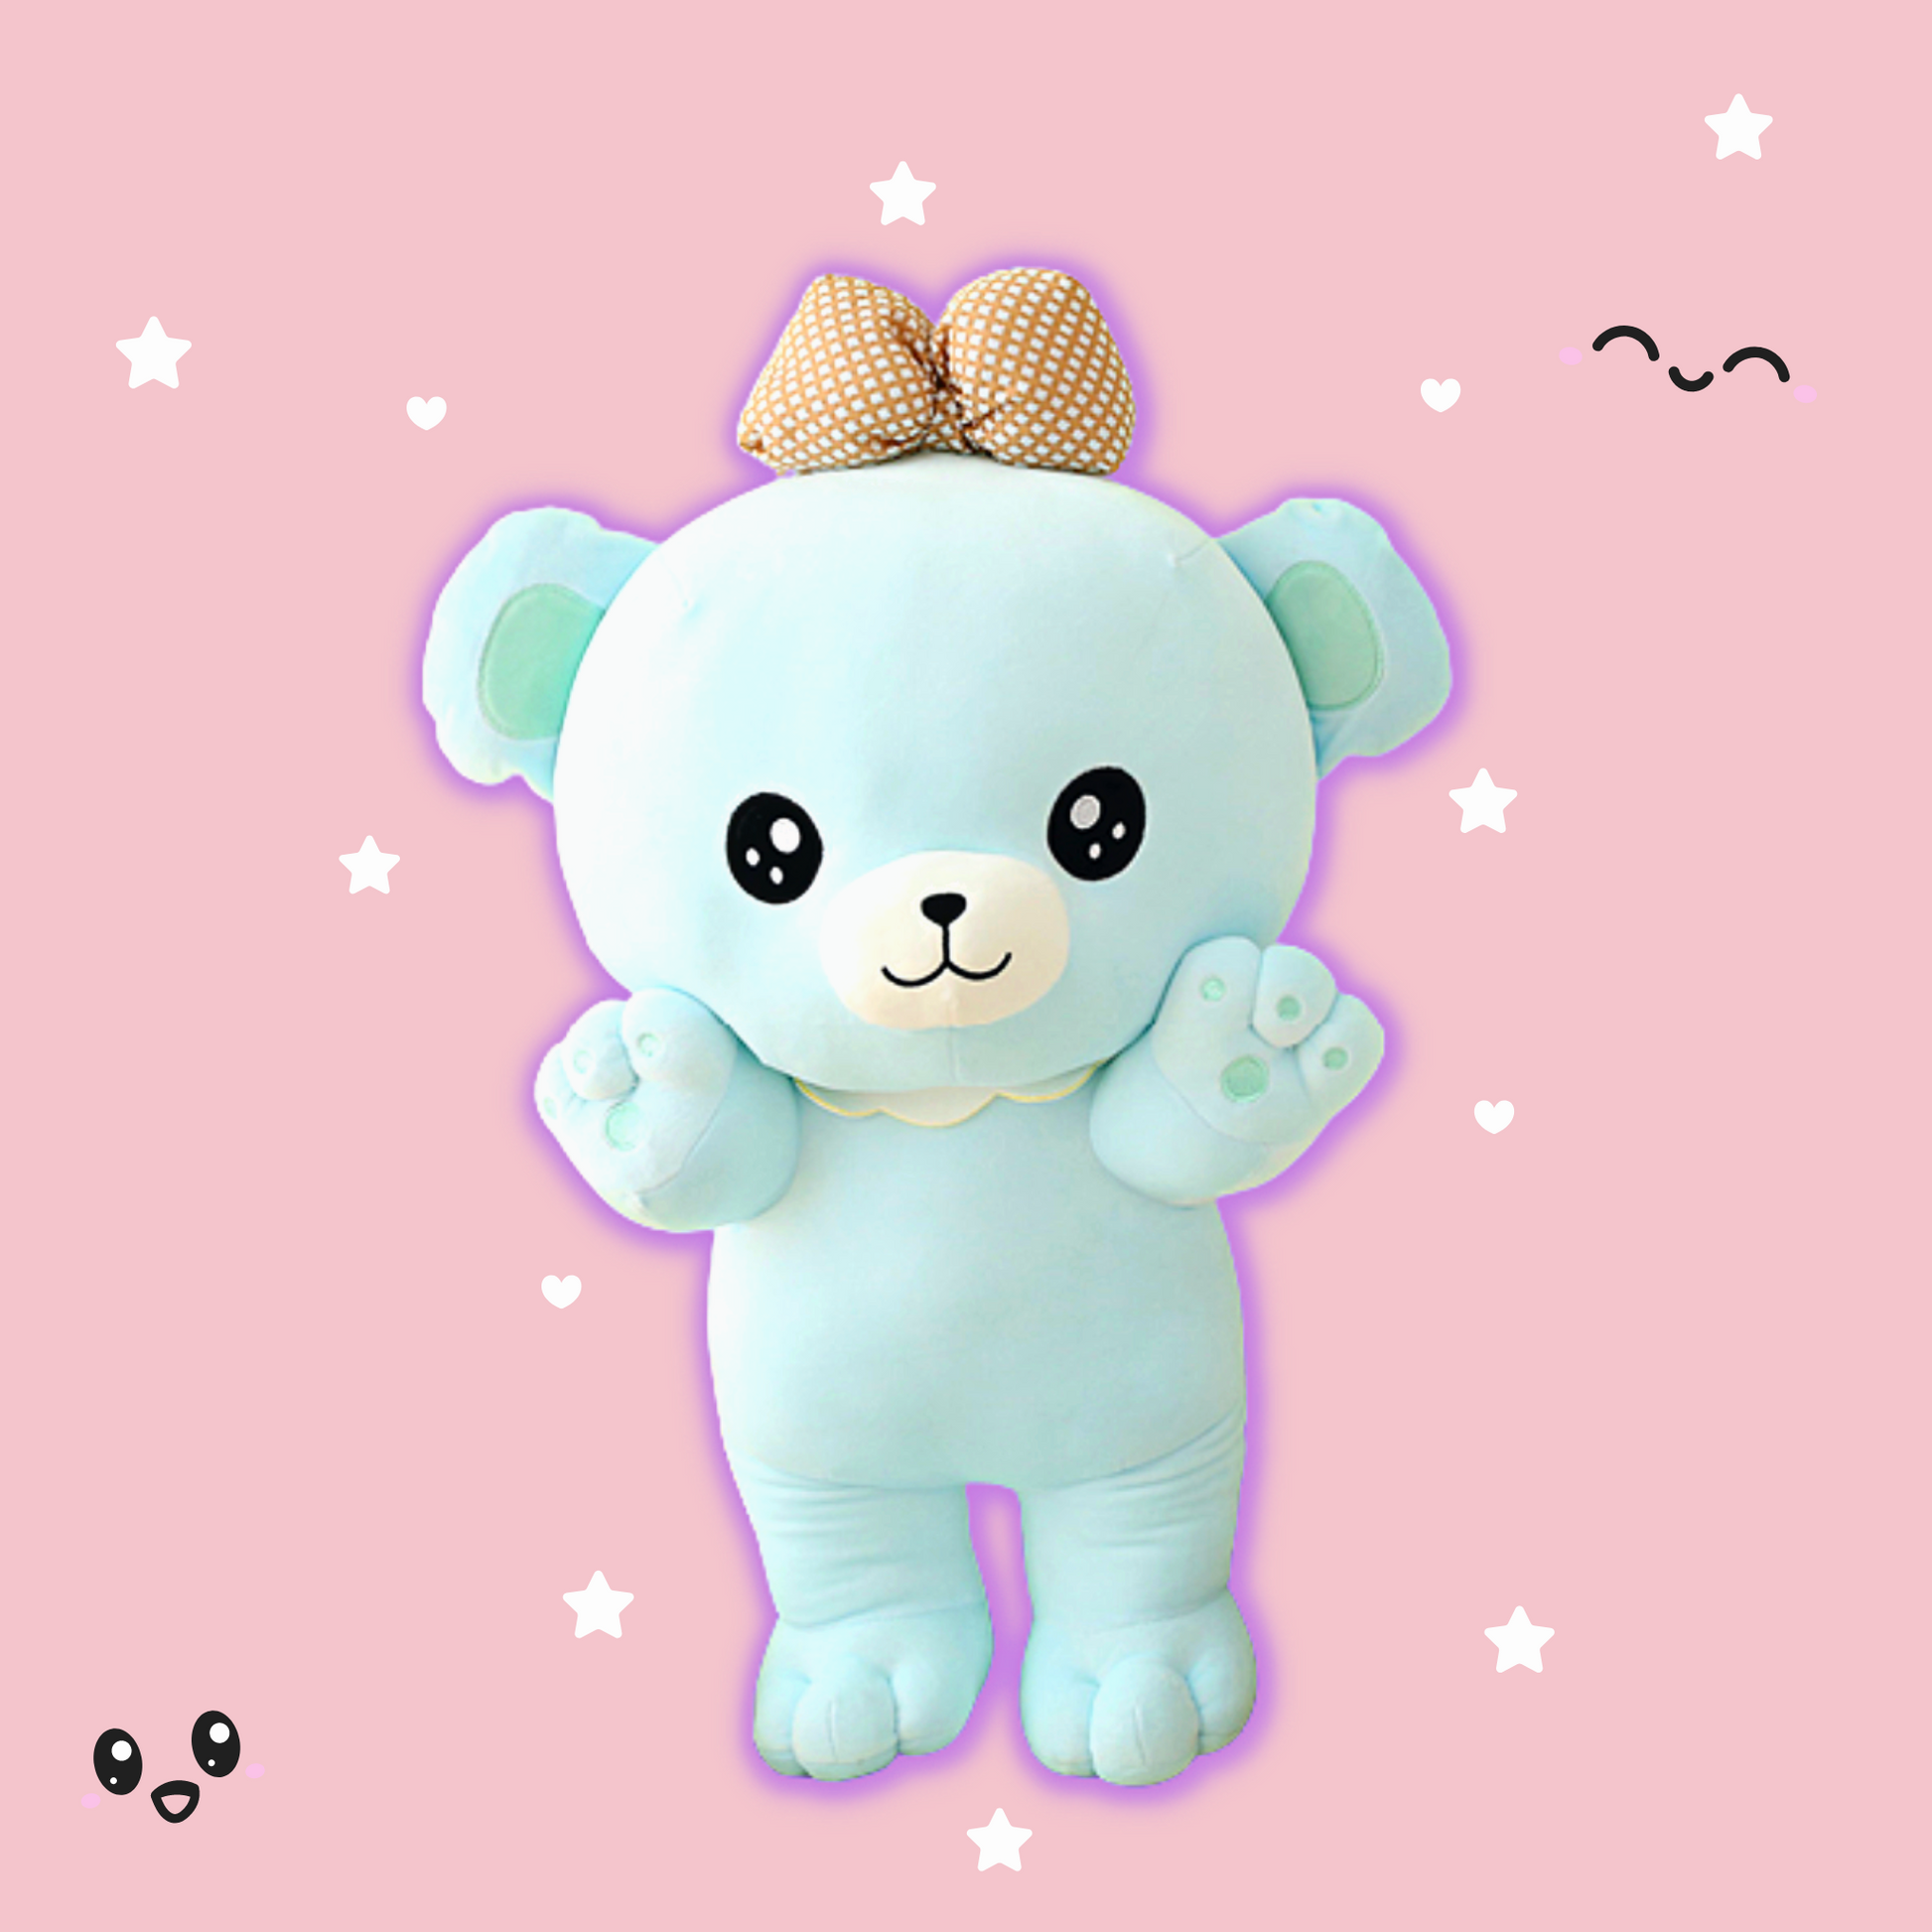 Shop MightyBear: Giant Kawaii Teddy Bear - Stuffed Animals Goodlifebean Giant Plushies